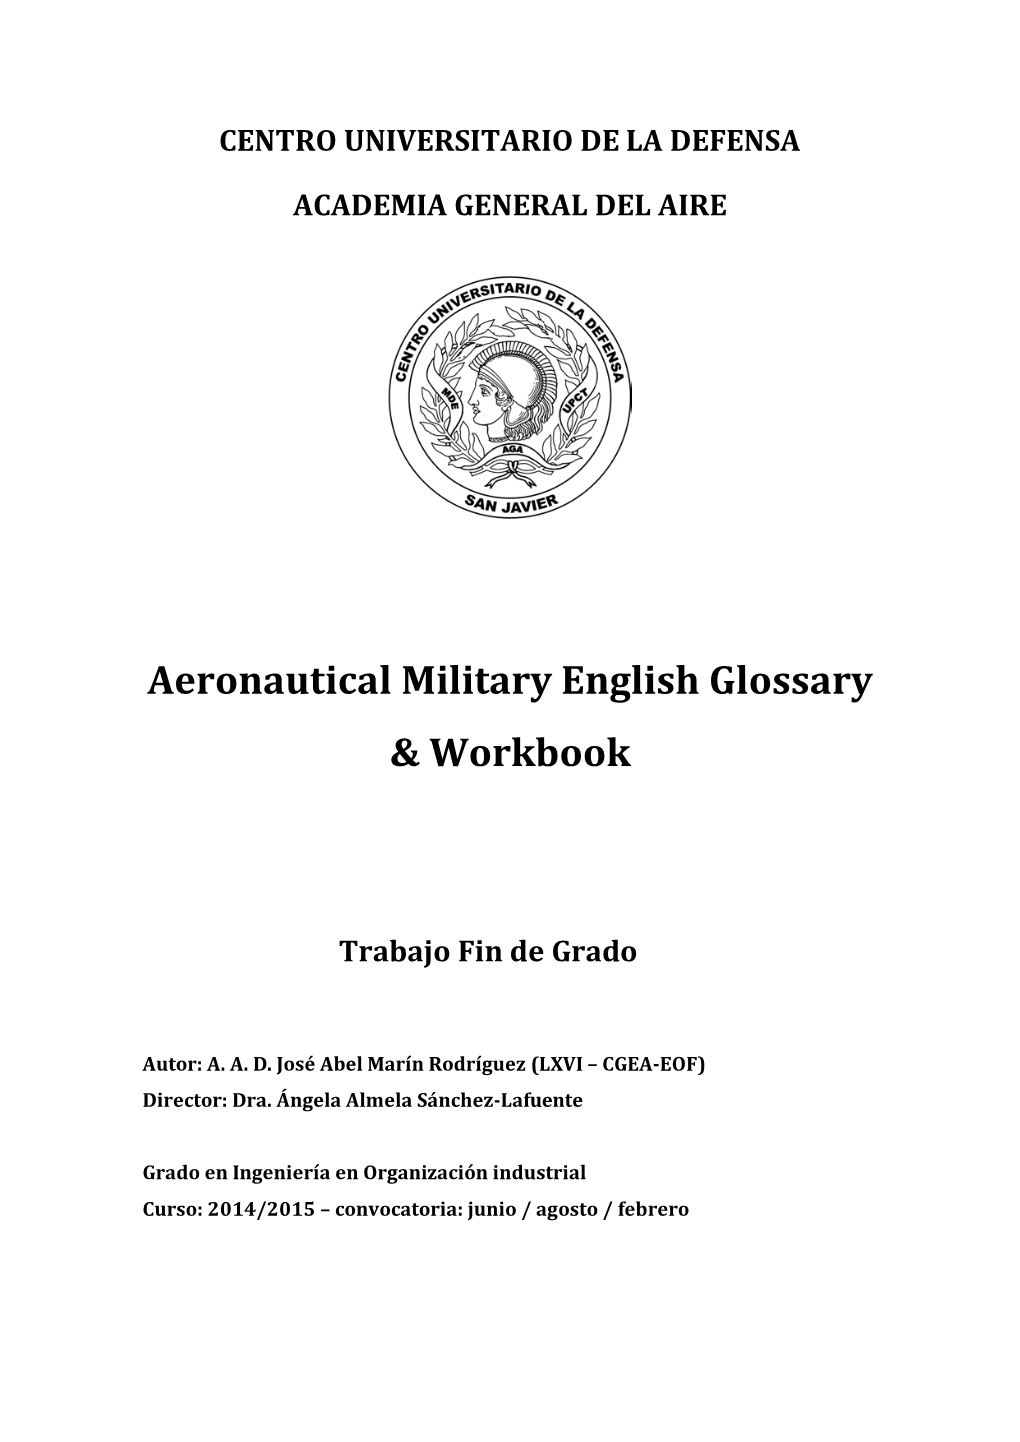 Aeronautical Military English Glossary & Workbook